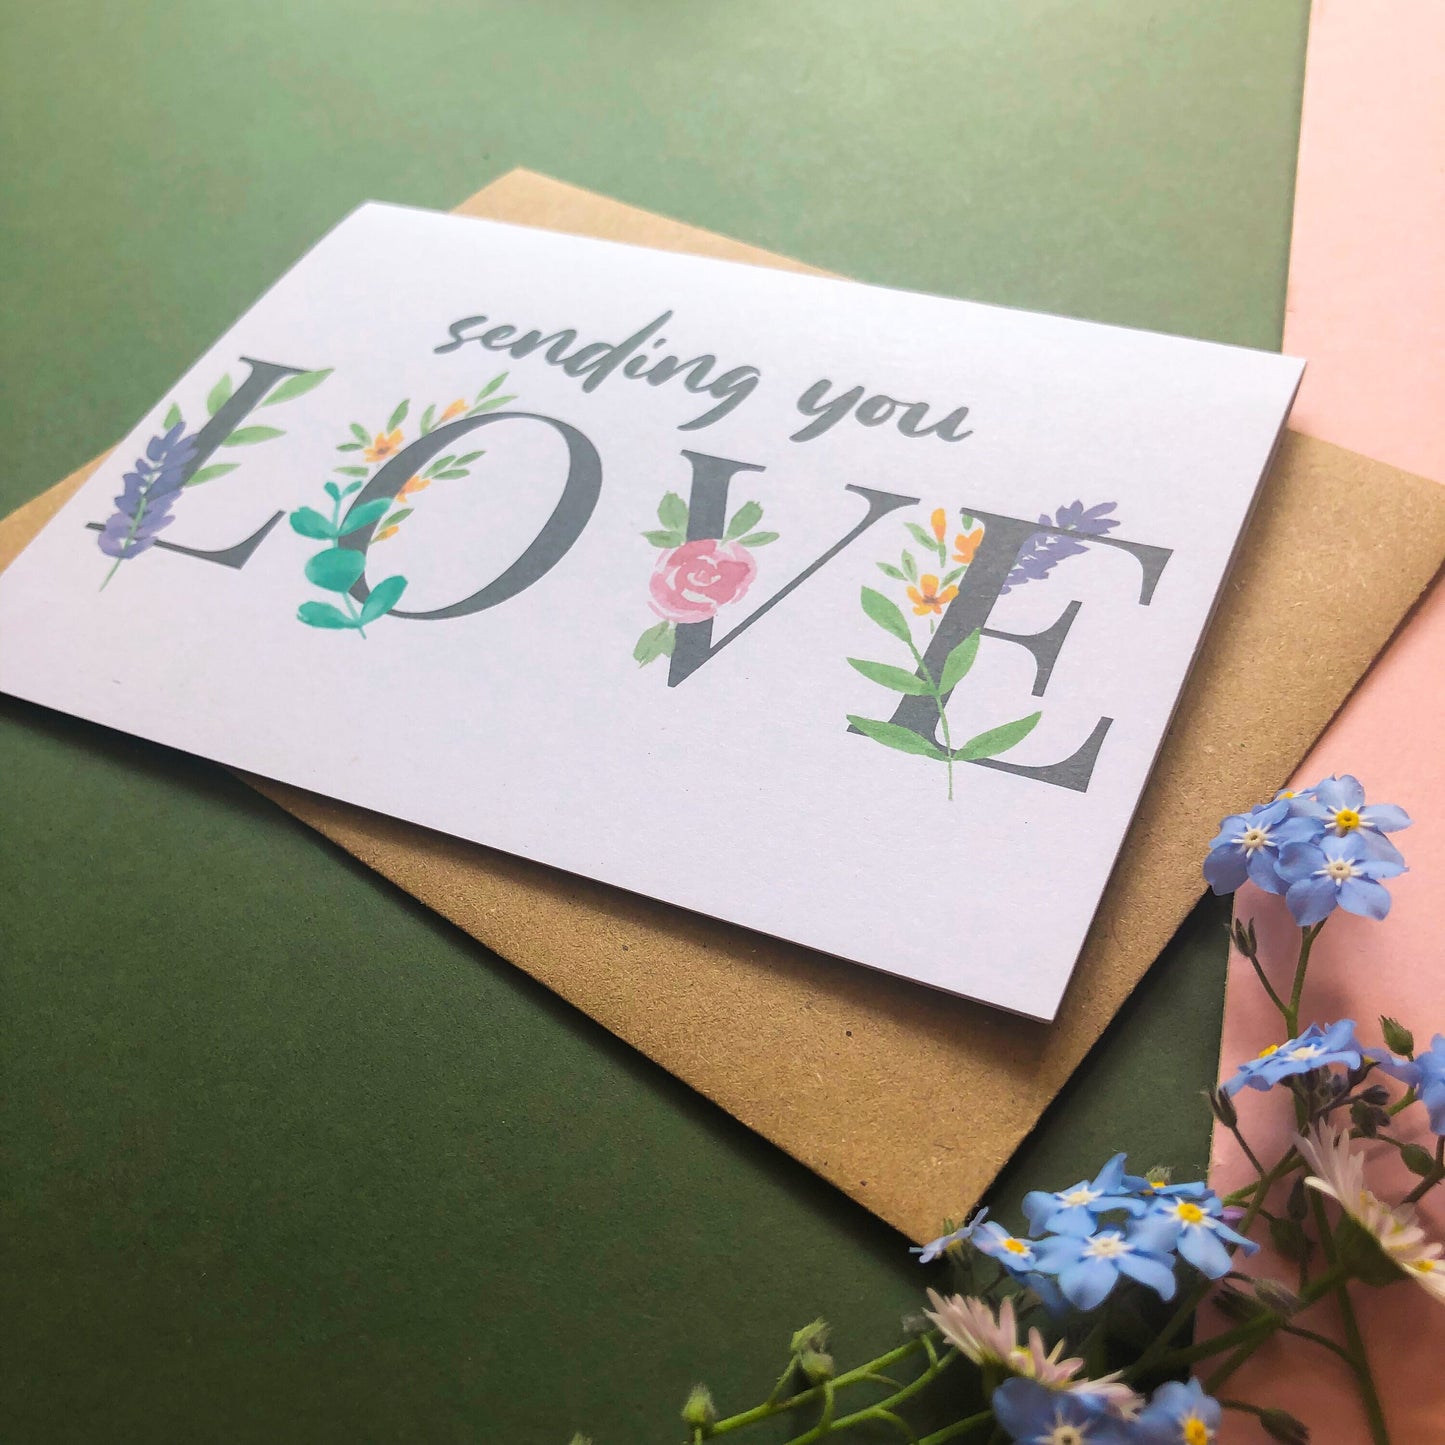 Sending You Love Floral Font Sympathy Card